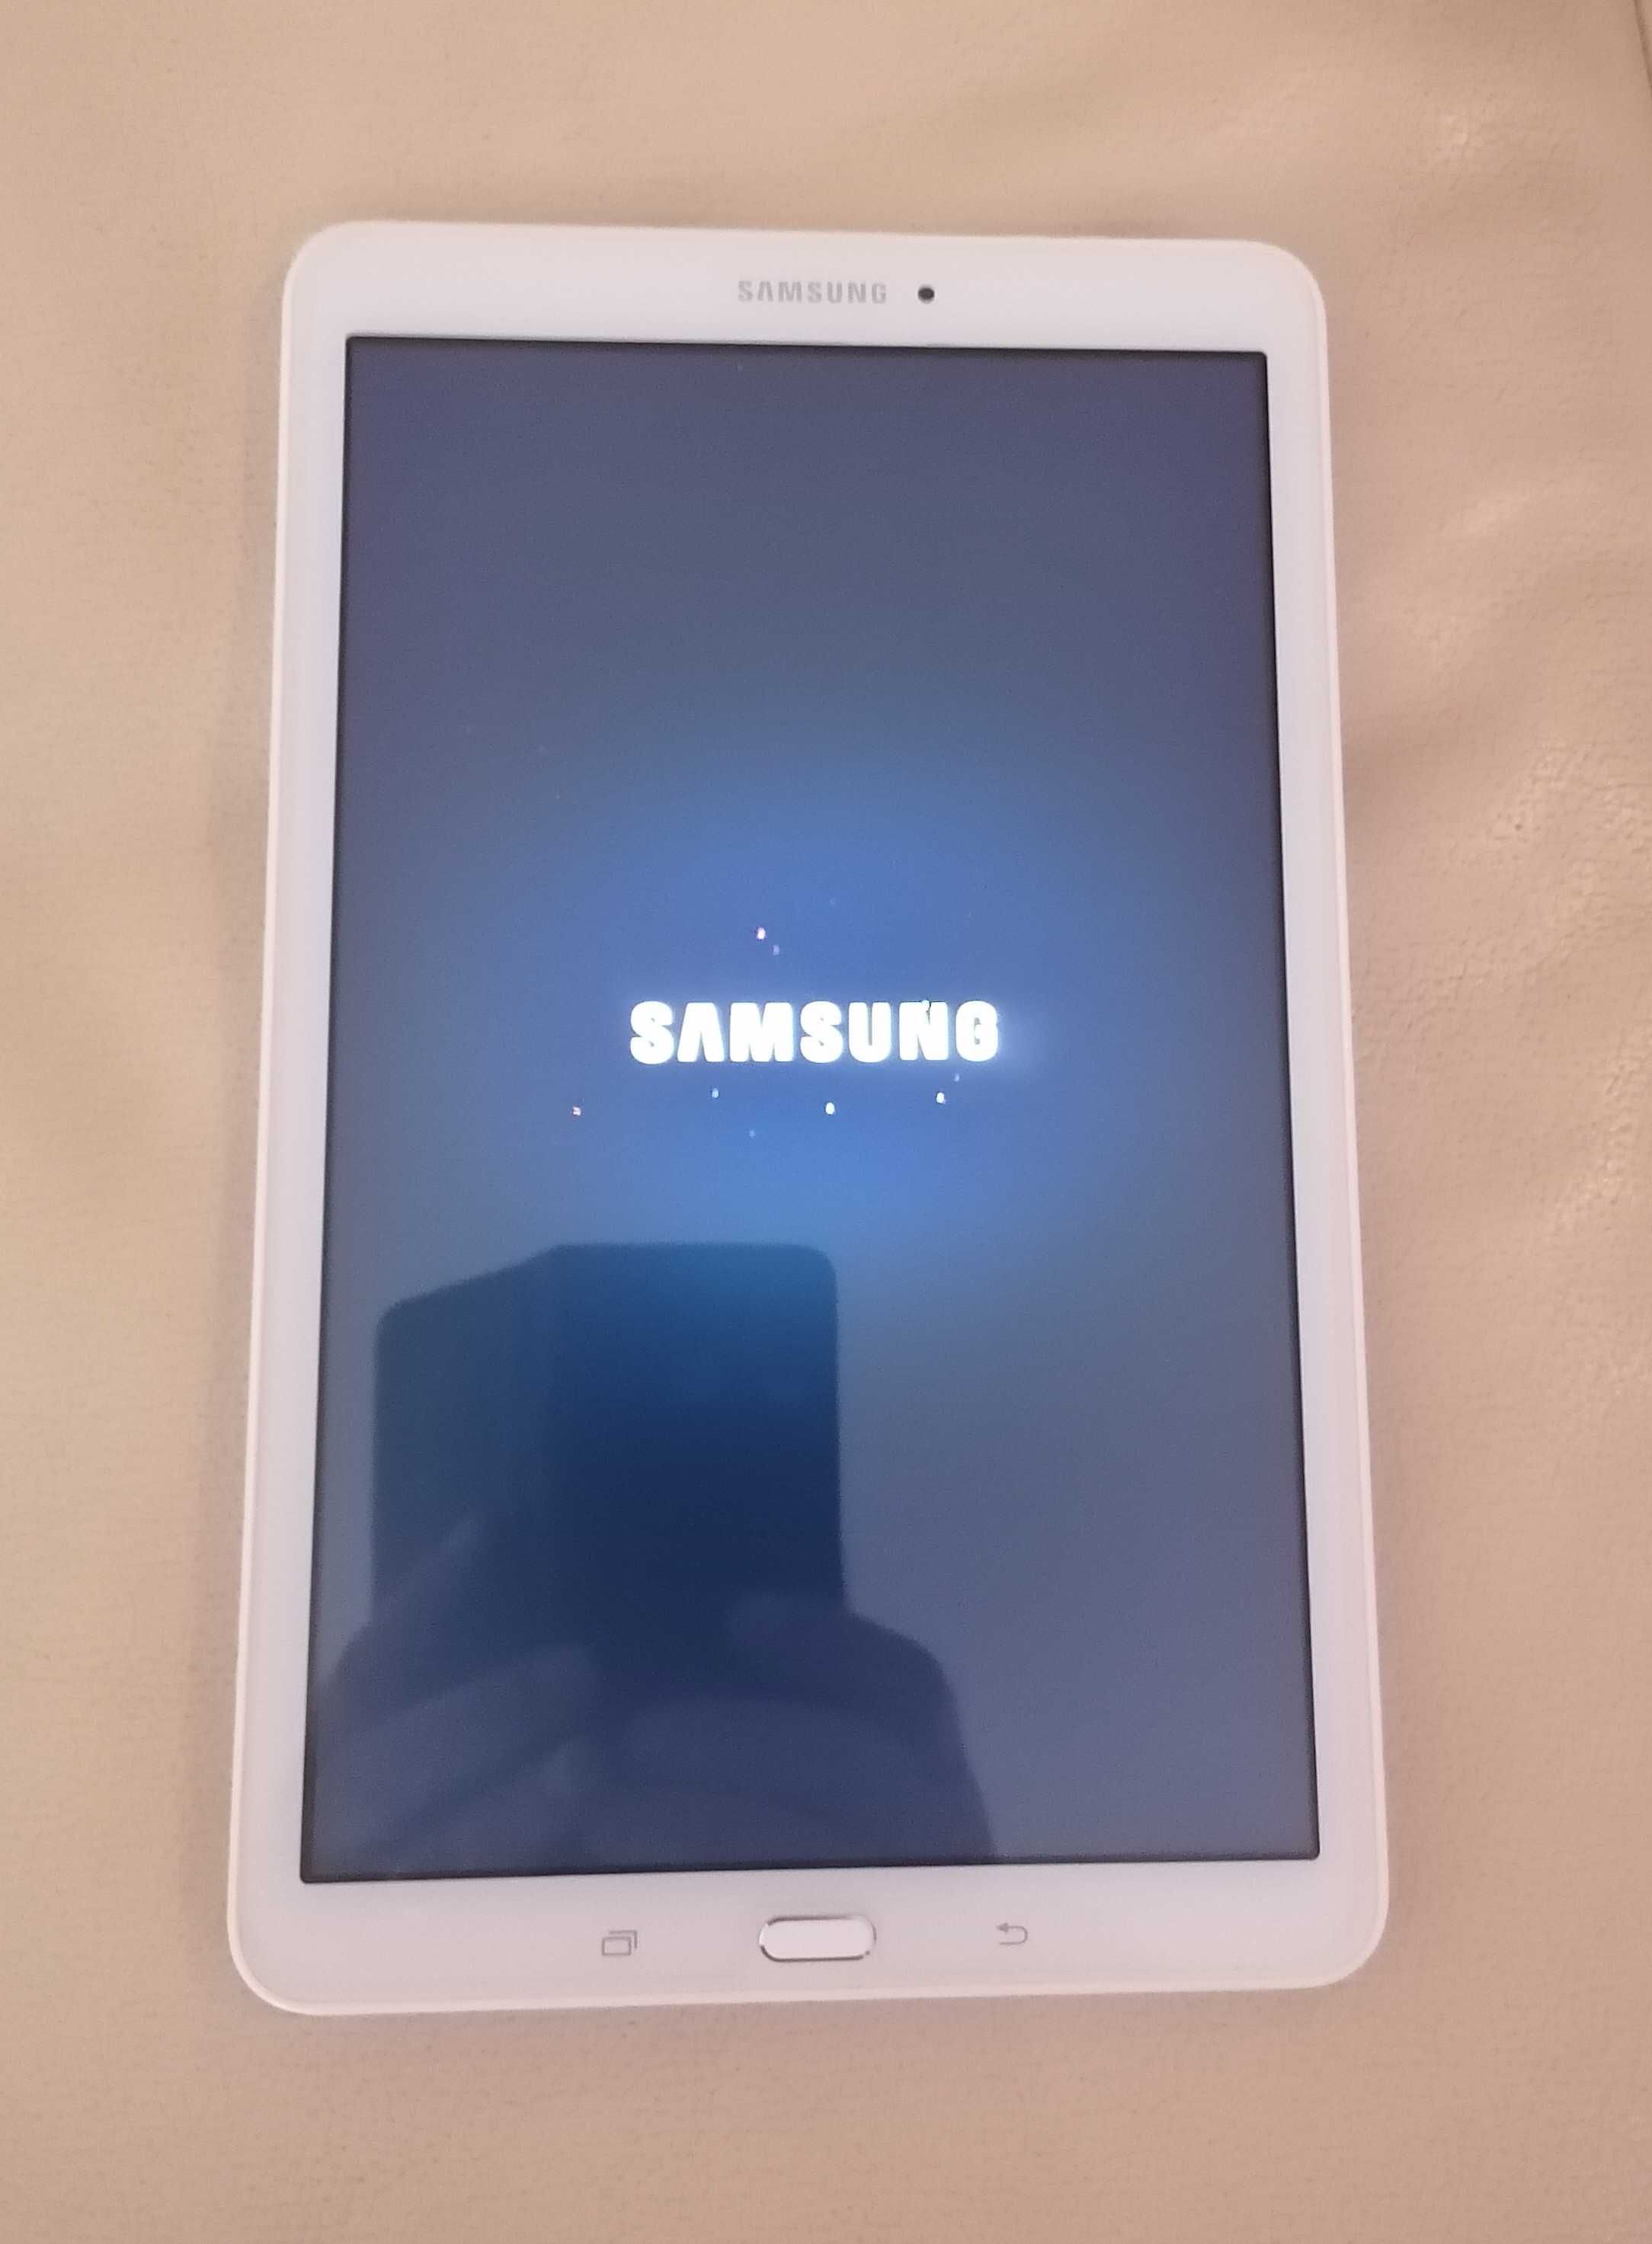 Tablet SAMSUNG Galaxy tabE - SM-T560